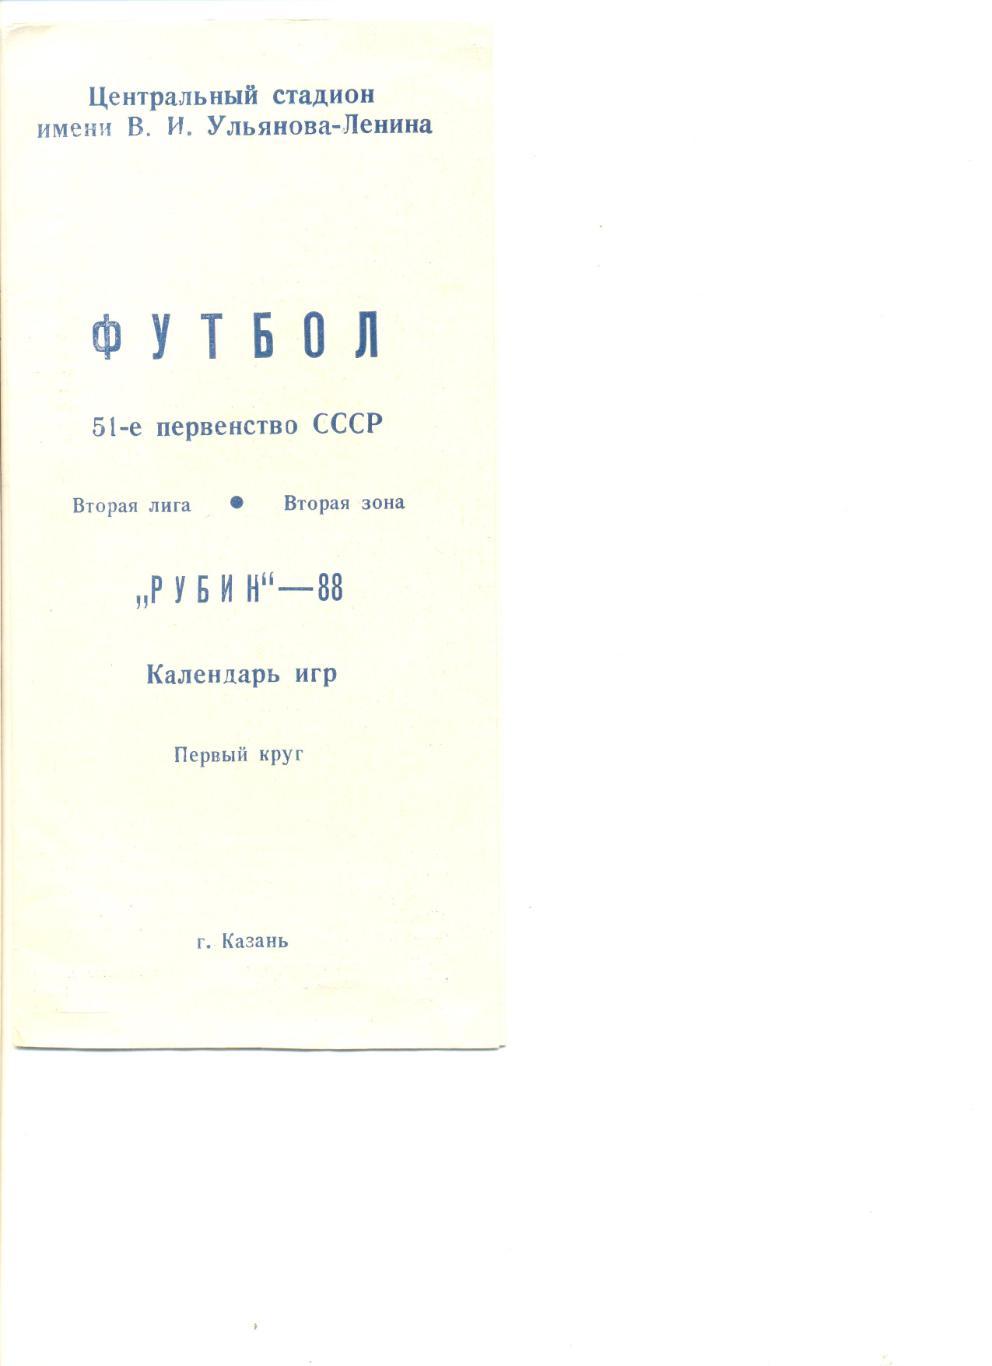 Рубин Казань-1988 г. 1 круг. (Состав, статистика, календарь).